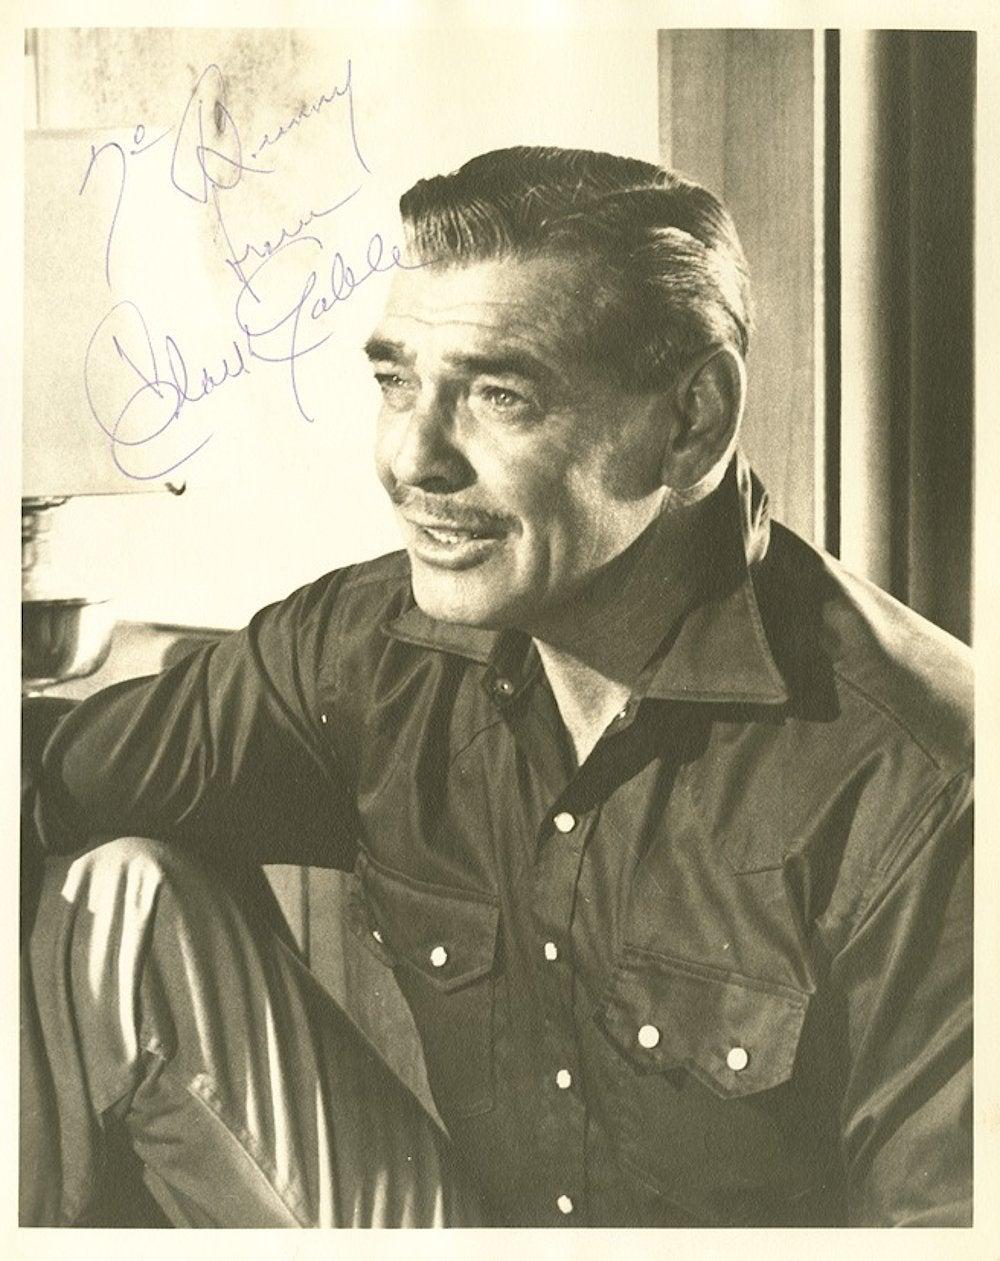 British Clark Gable Signed Photograph Black and White circa 1930s / 1940s